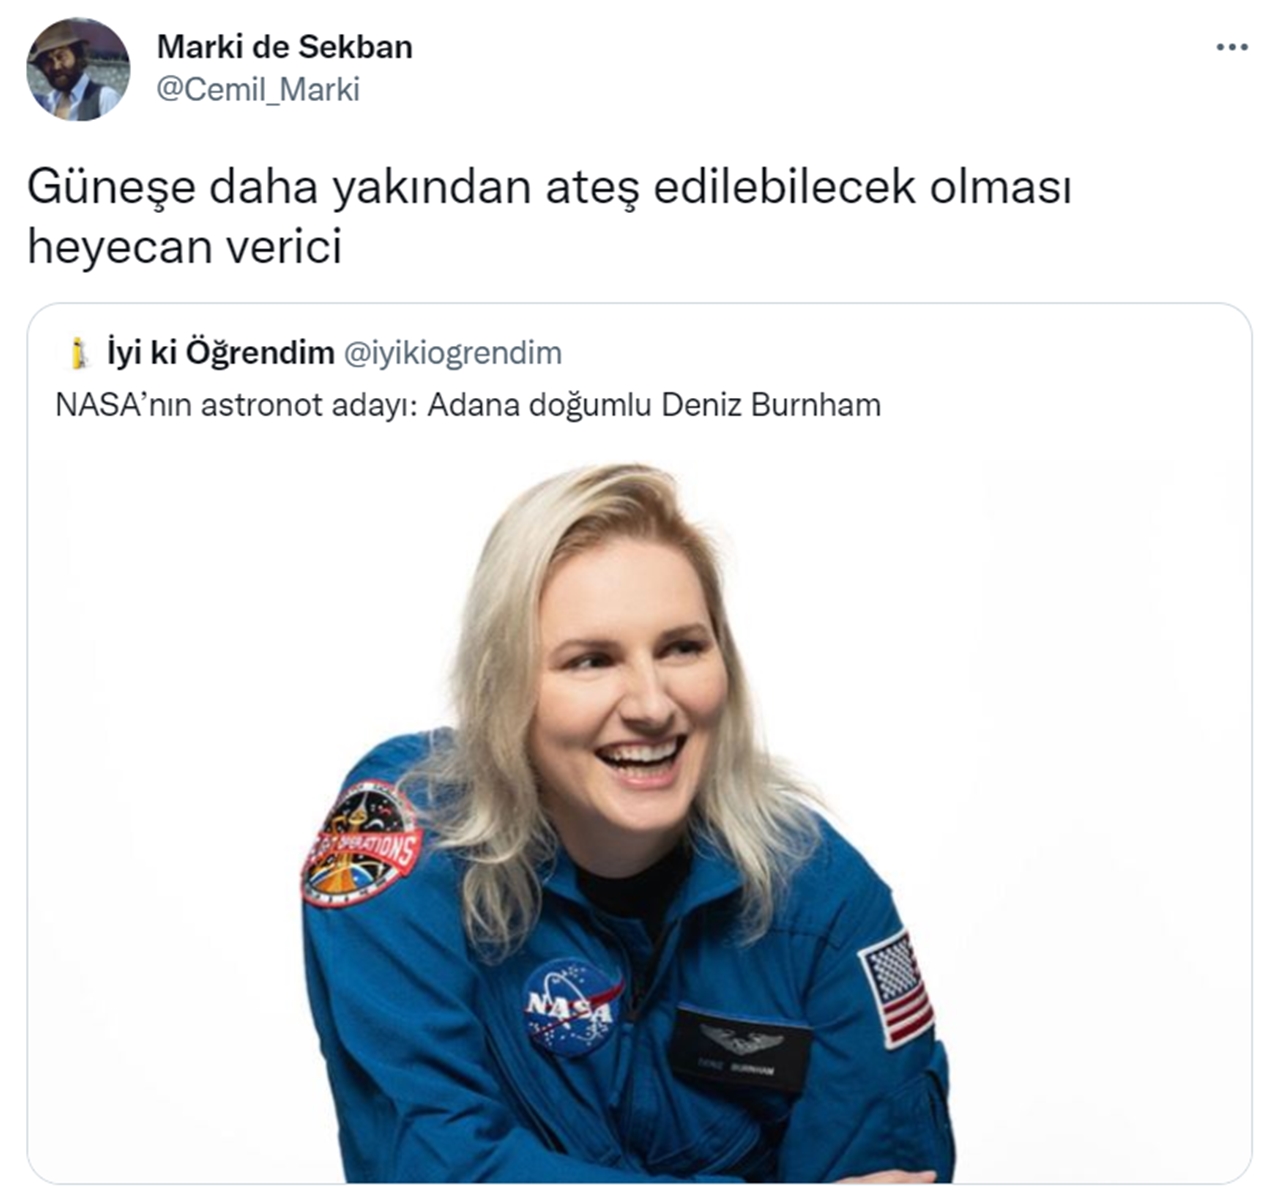 adana astronot